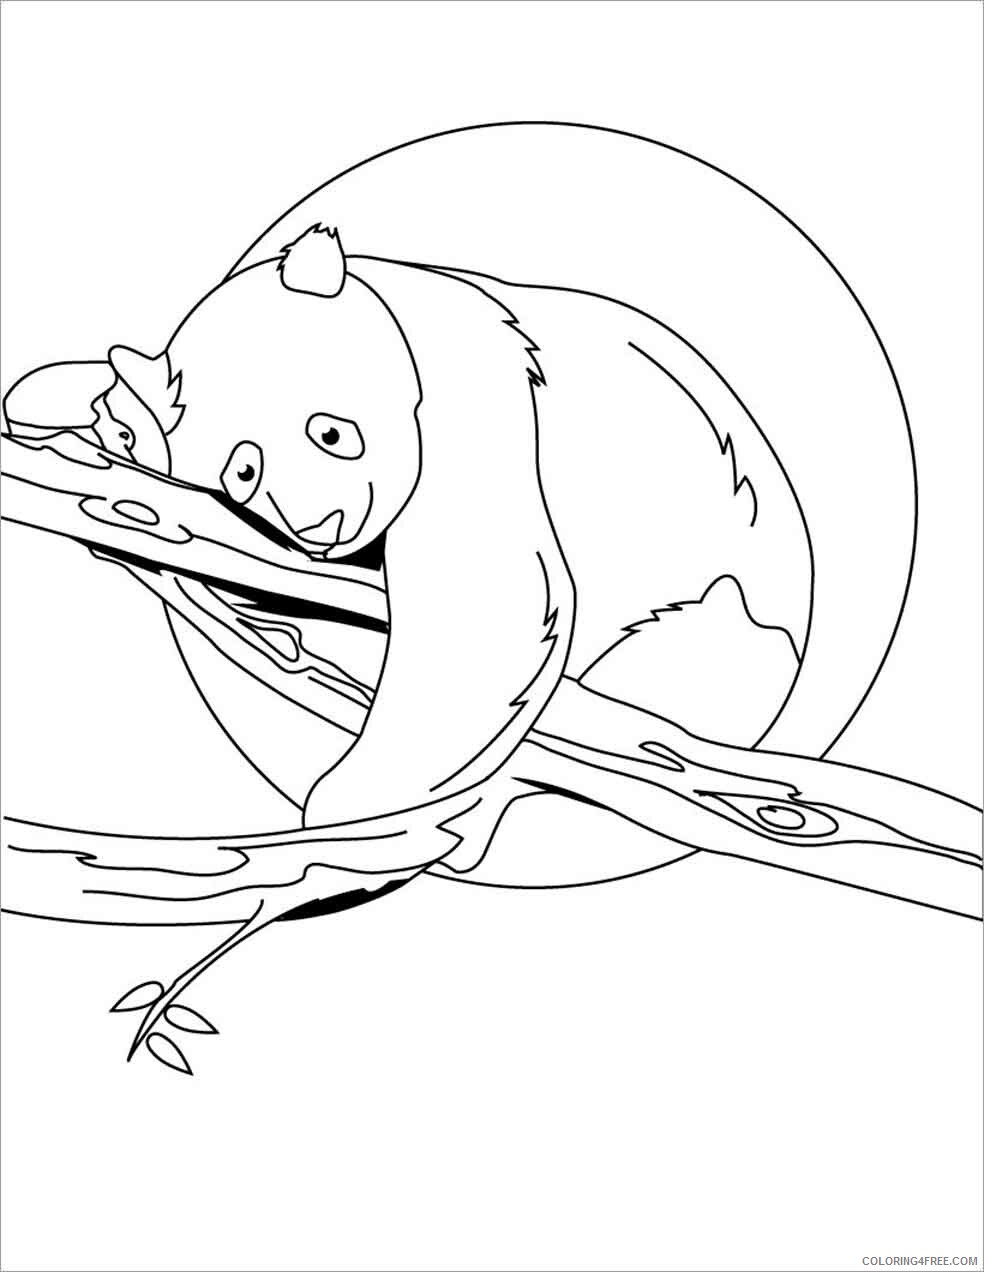 Panda Coloring Pages Animal Printable Sheets panda lives on trees 2021 3693 Coloring4free